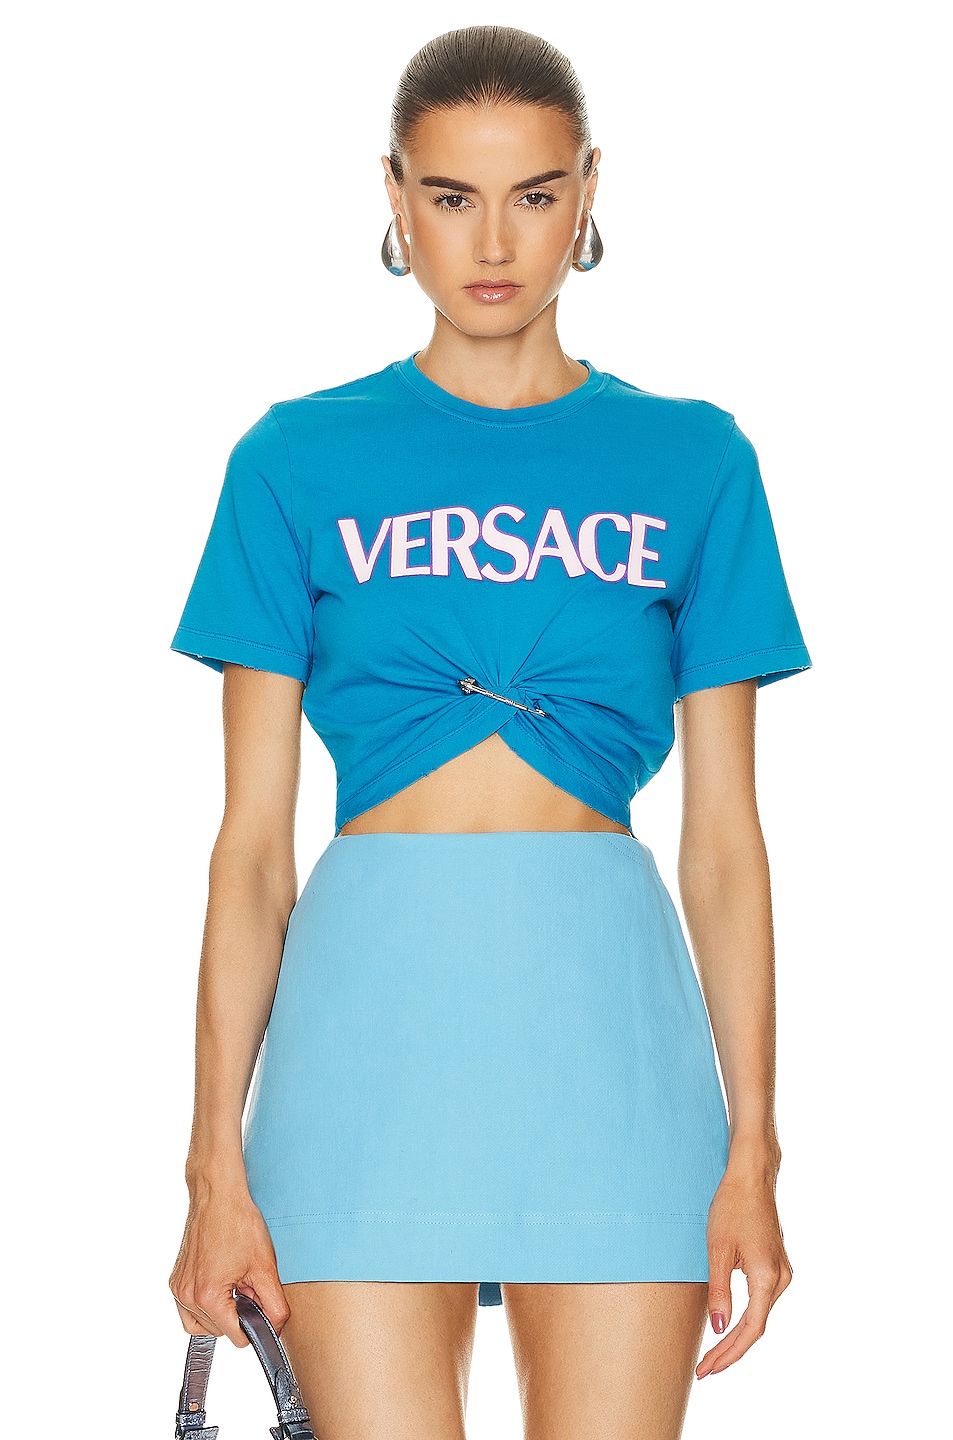 VERSACE Jersey T-shirt in Mediterranean Blue & Light Peony | FWRD